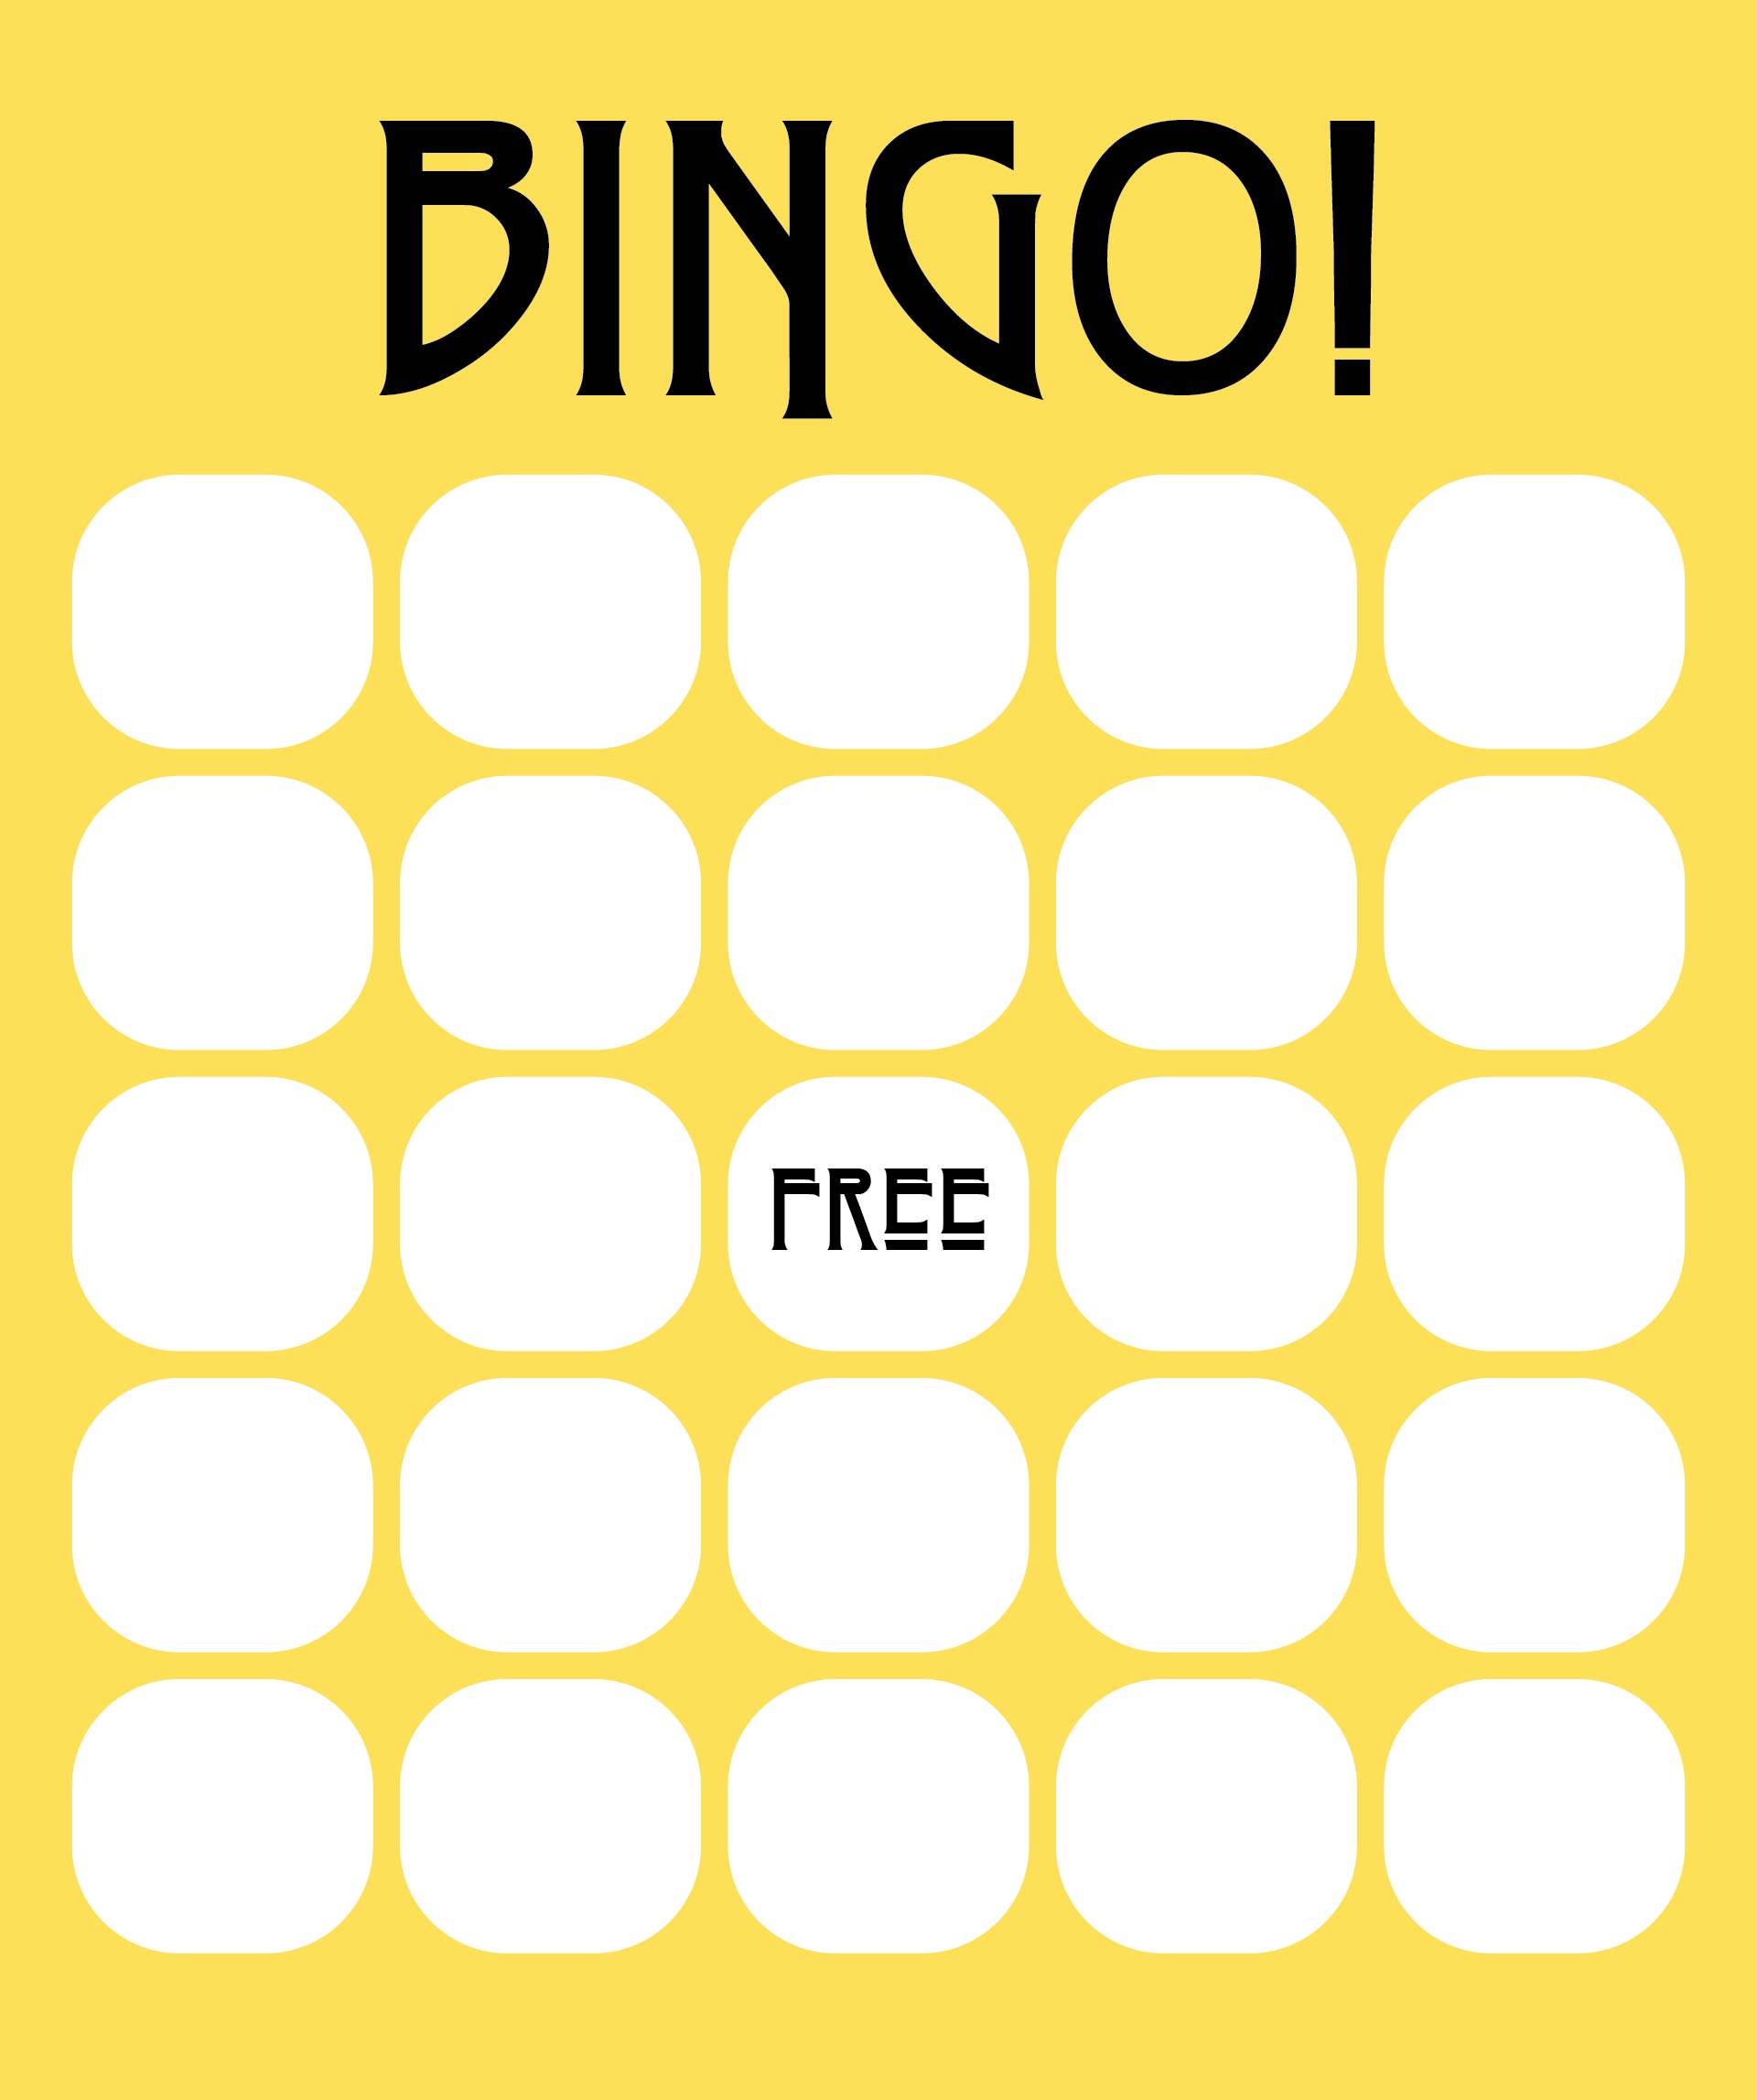 blank-bingo-card